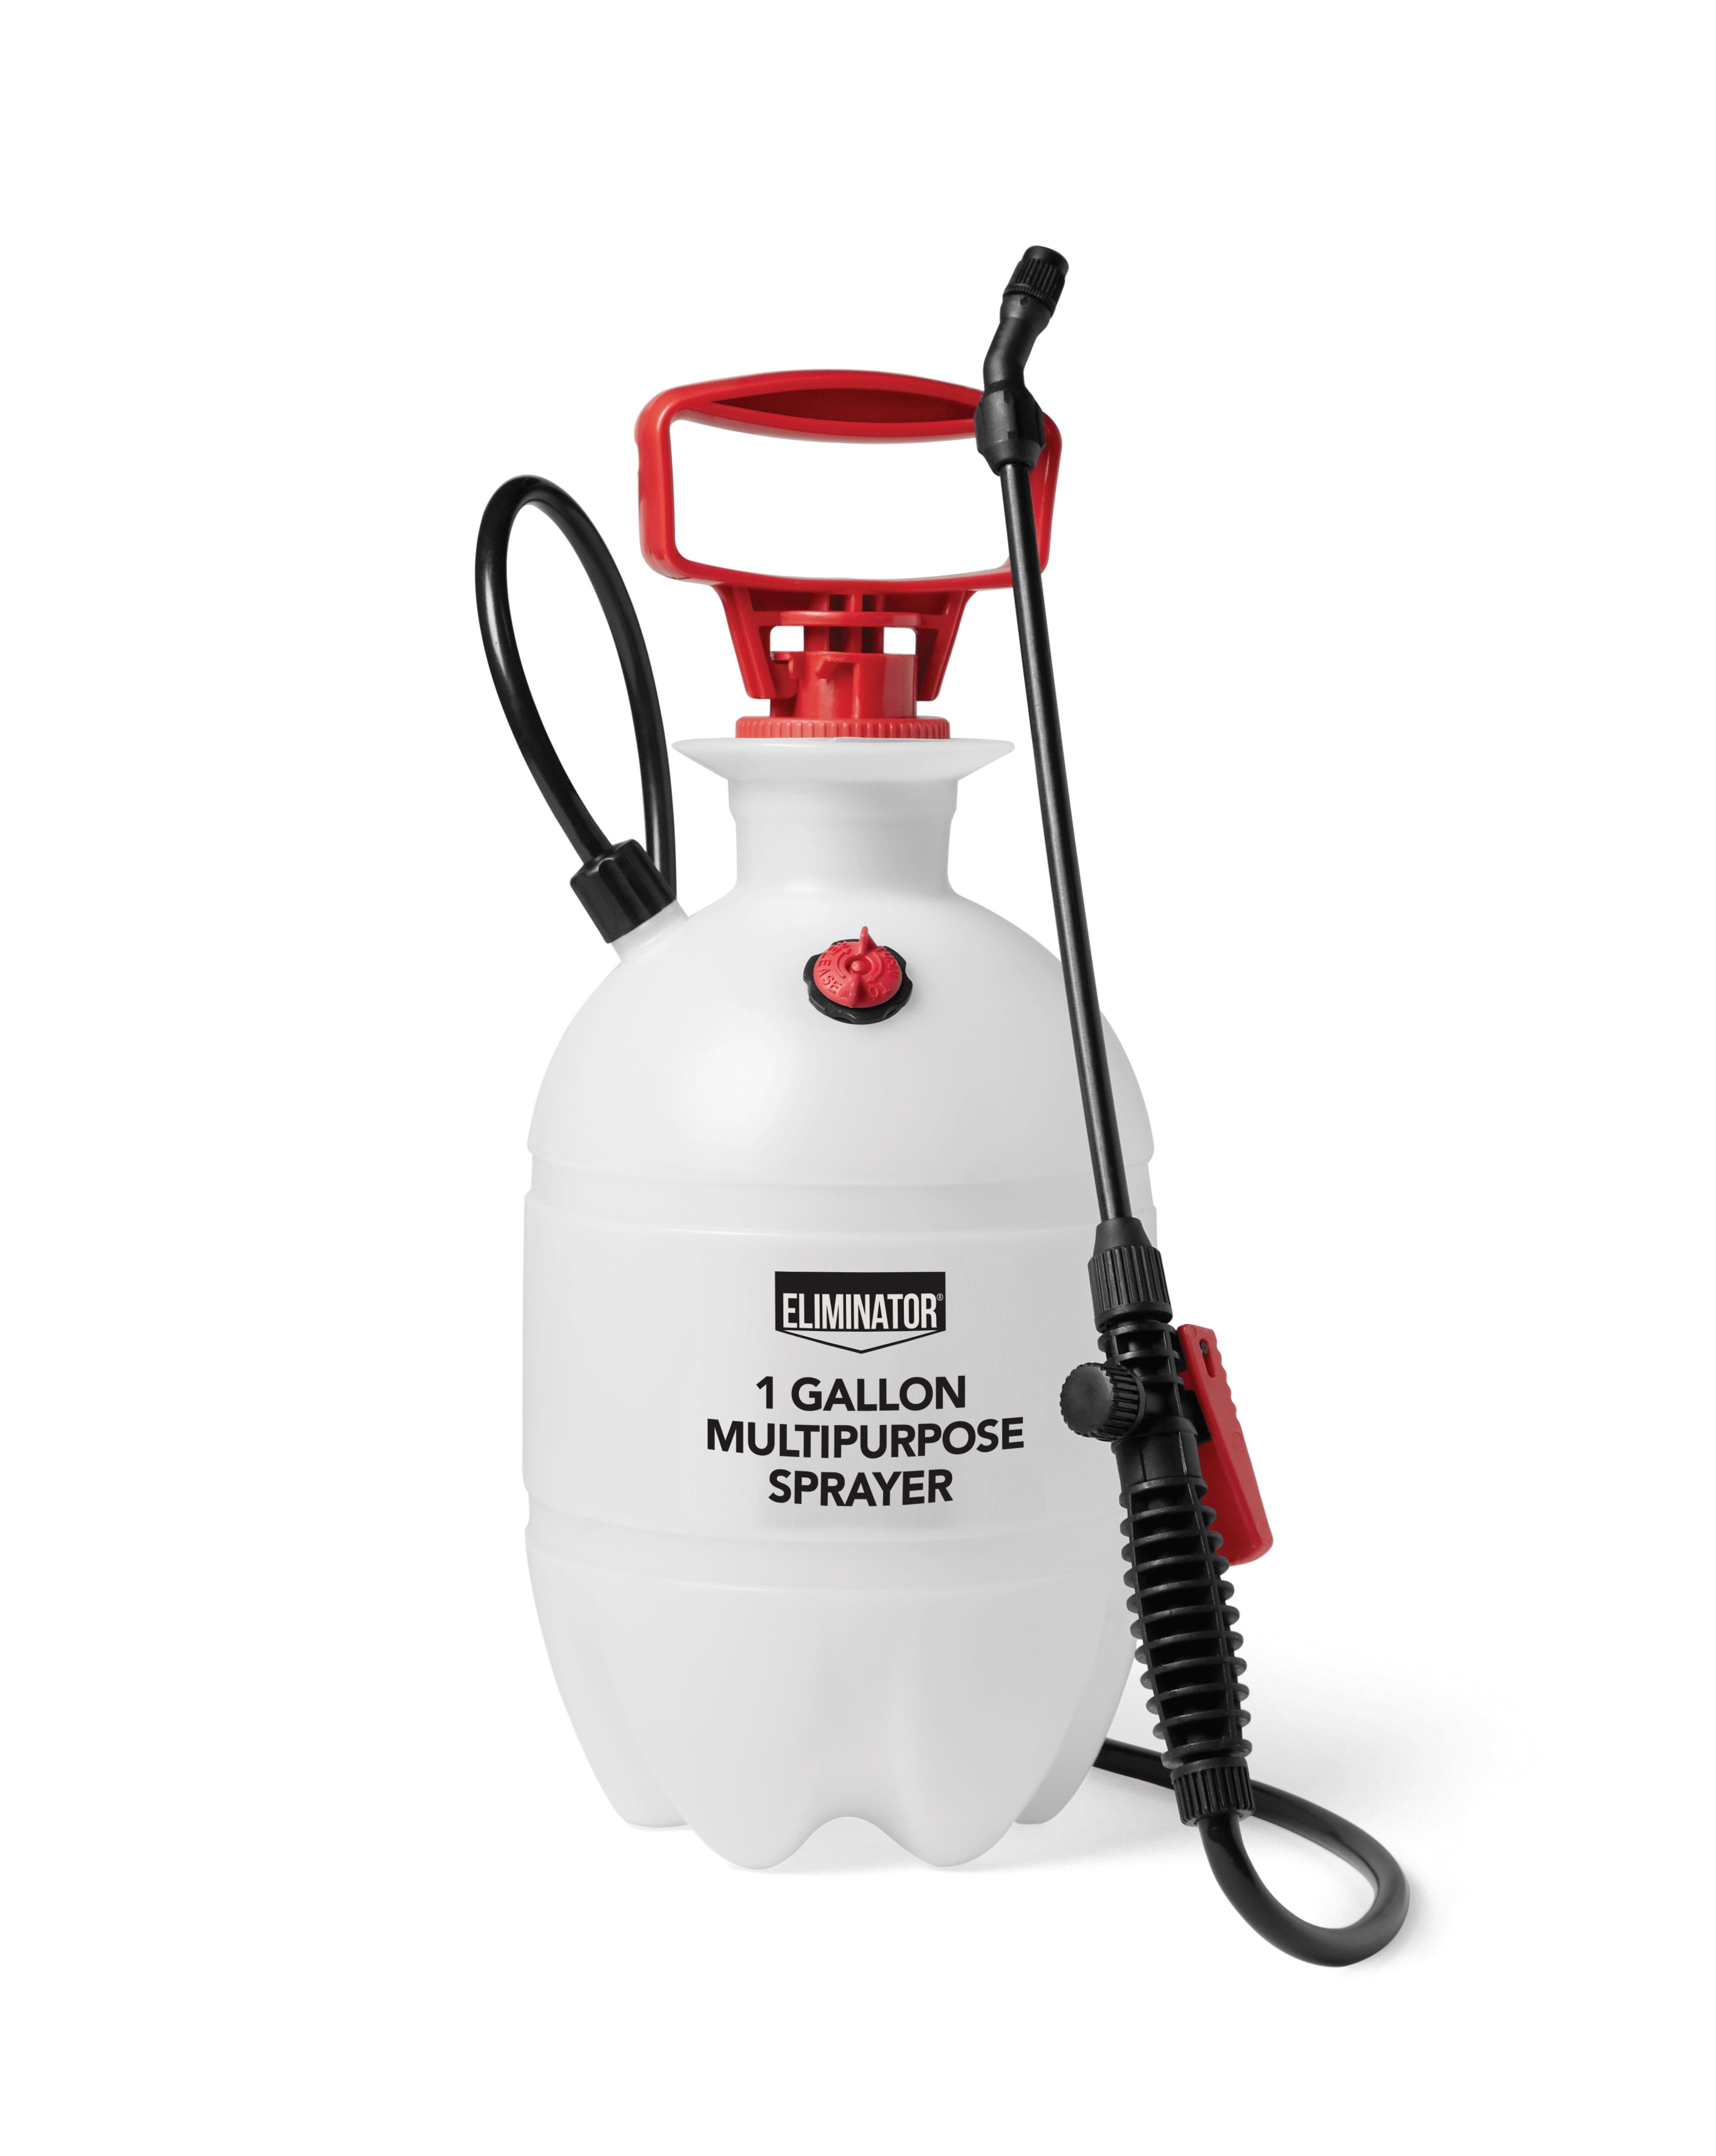 Eliminator 1 Gallon Sprayer – Walmart Inventory Checker – BrickSeek